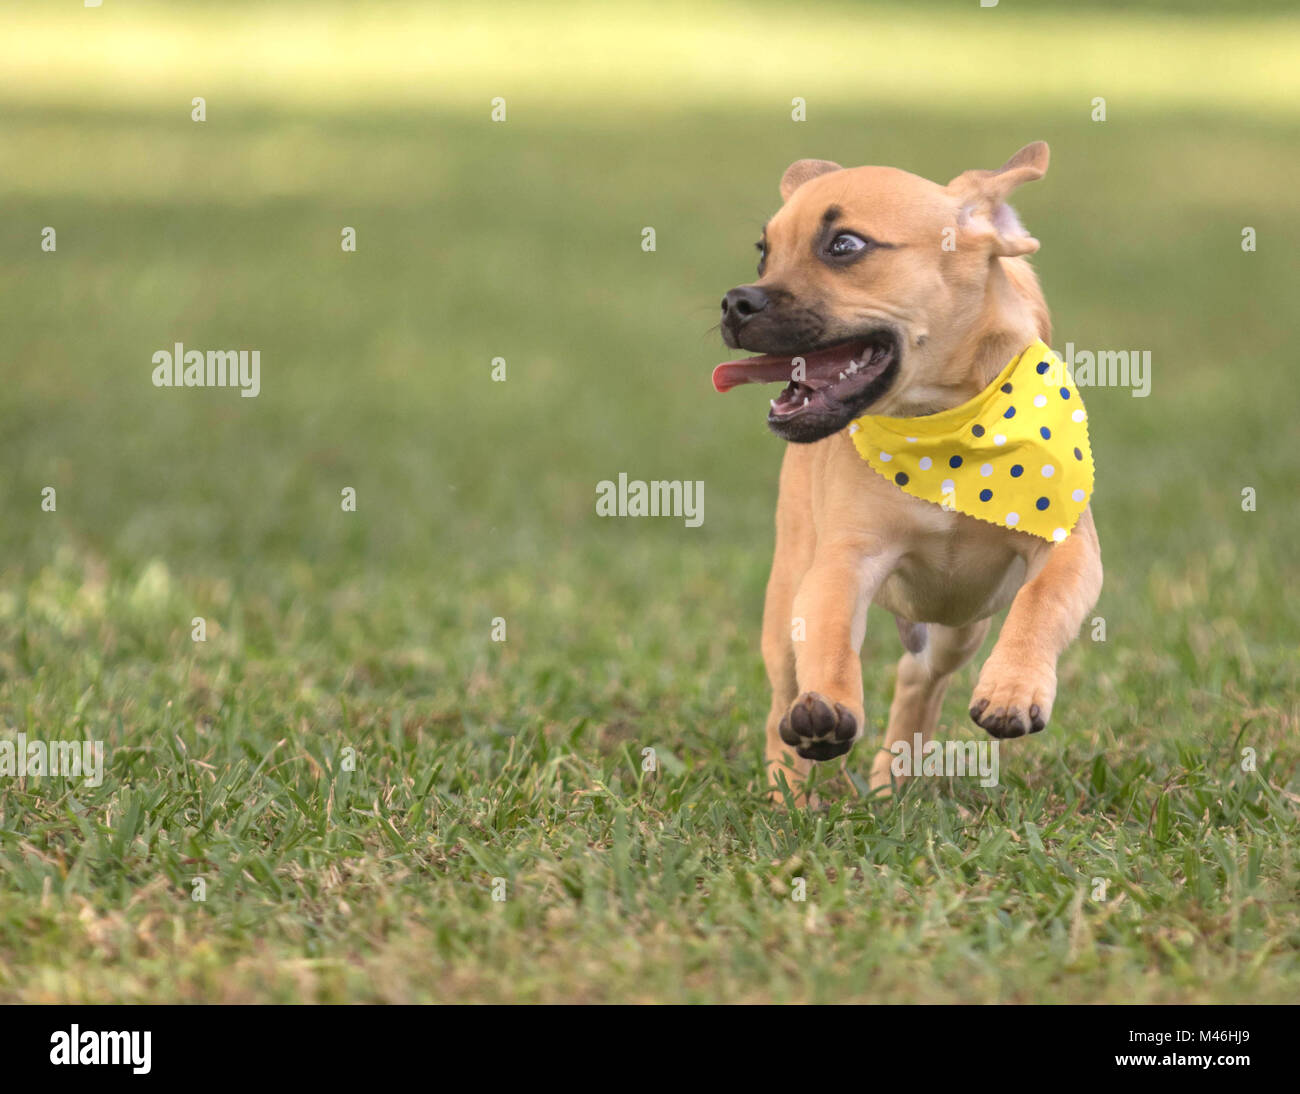 Cute puppy running toward camera on grass wearing polka dot bandana Stock Photo